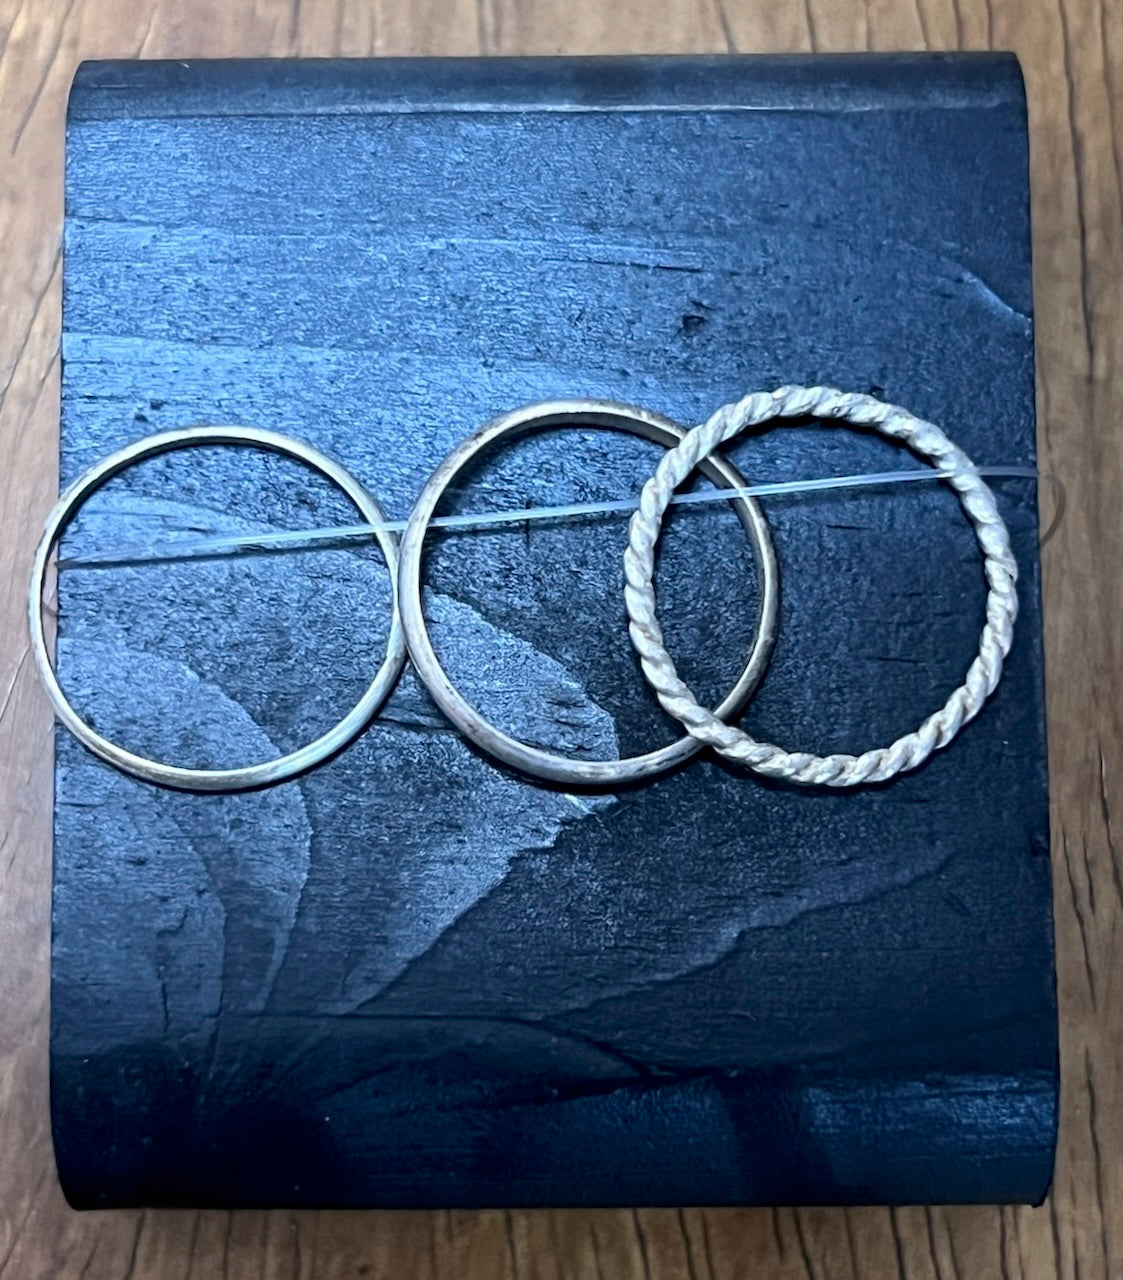 3 silver rings